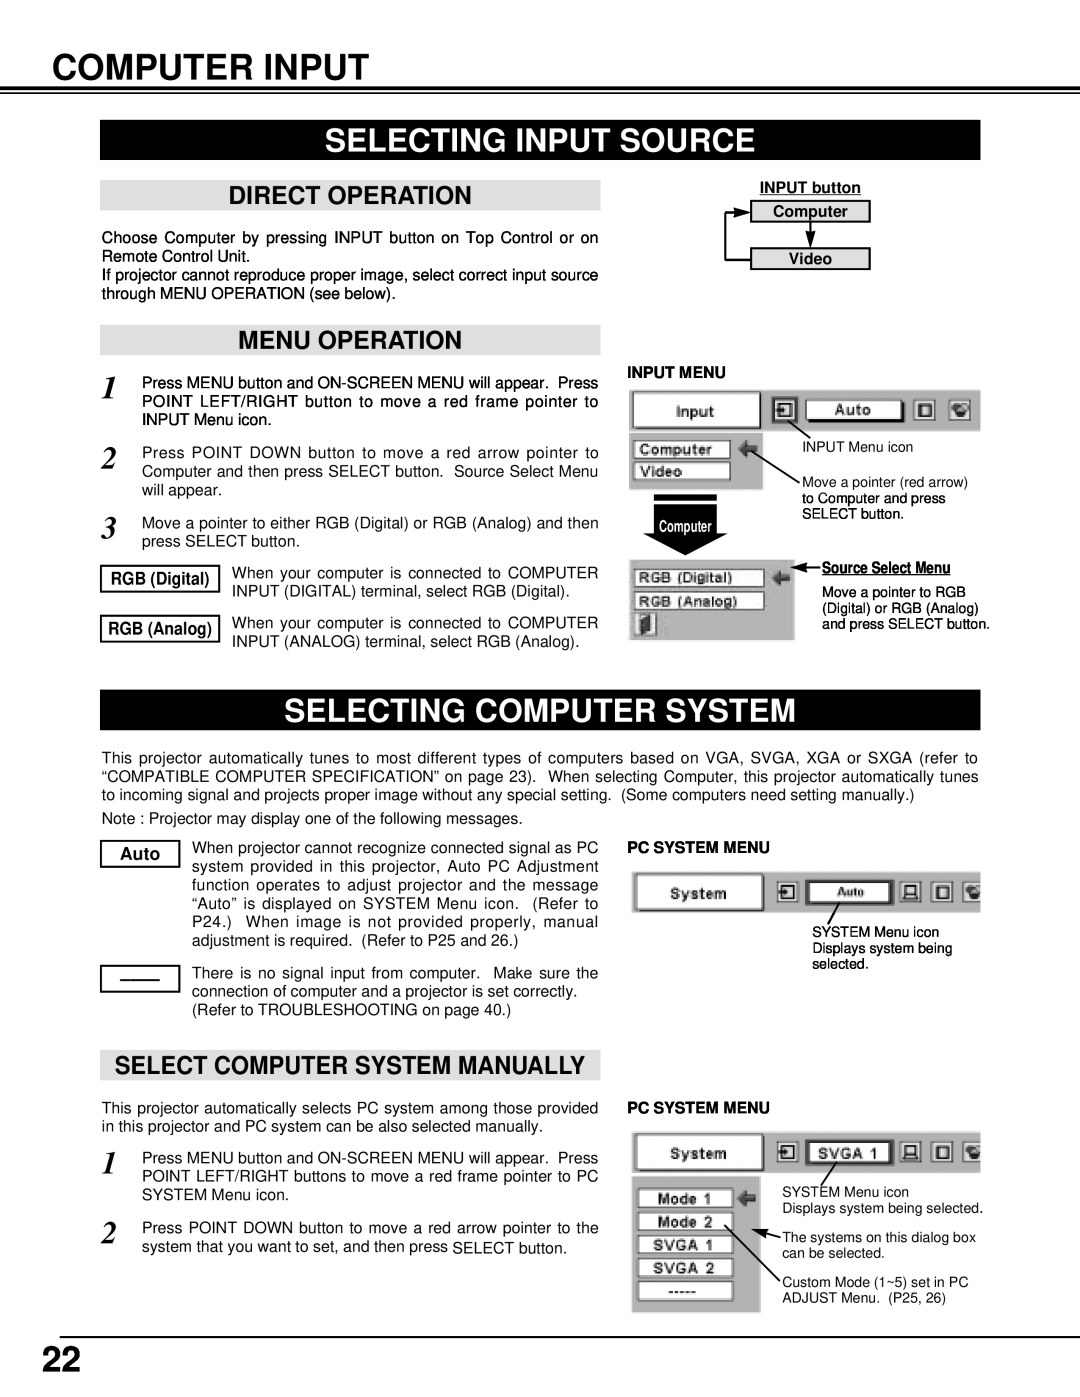 BOXLIGHT cp-12t manual Computer Input, Selecting Input Source, Selecting Computer System, Select Computer System Manually 